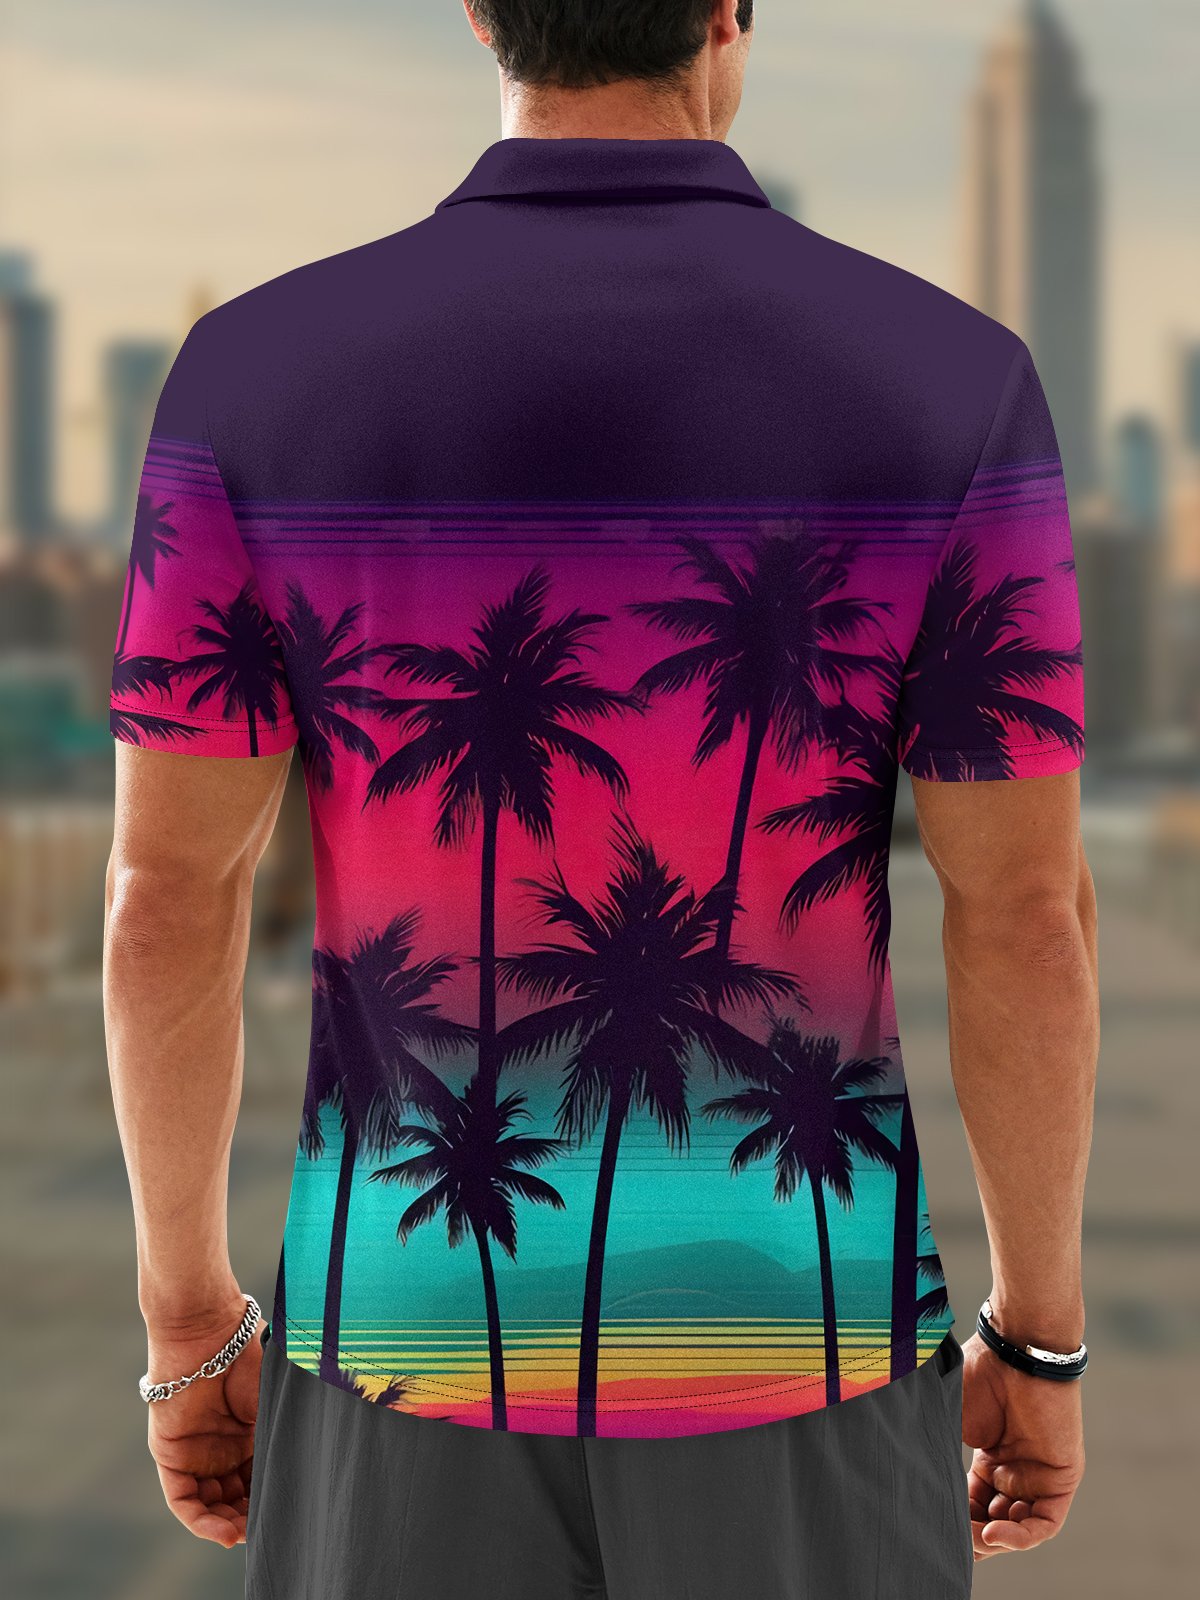 Hardaddy Moisture-wicking Palm Tree Short Sleeve Golf Polo Shirt